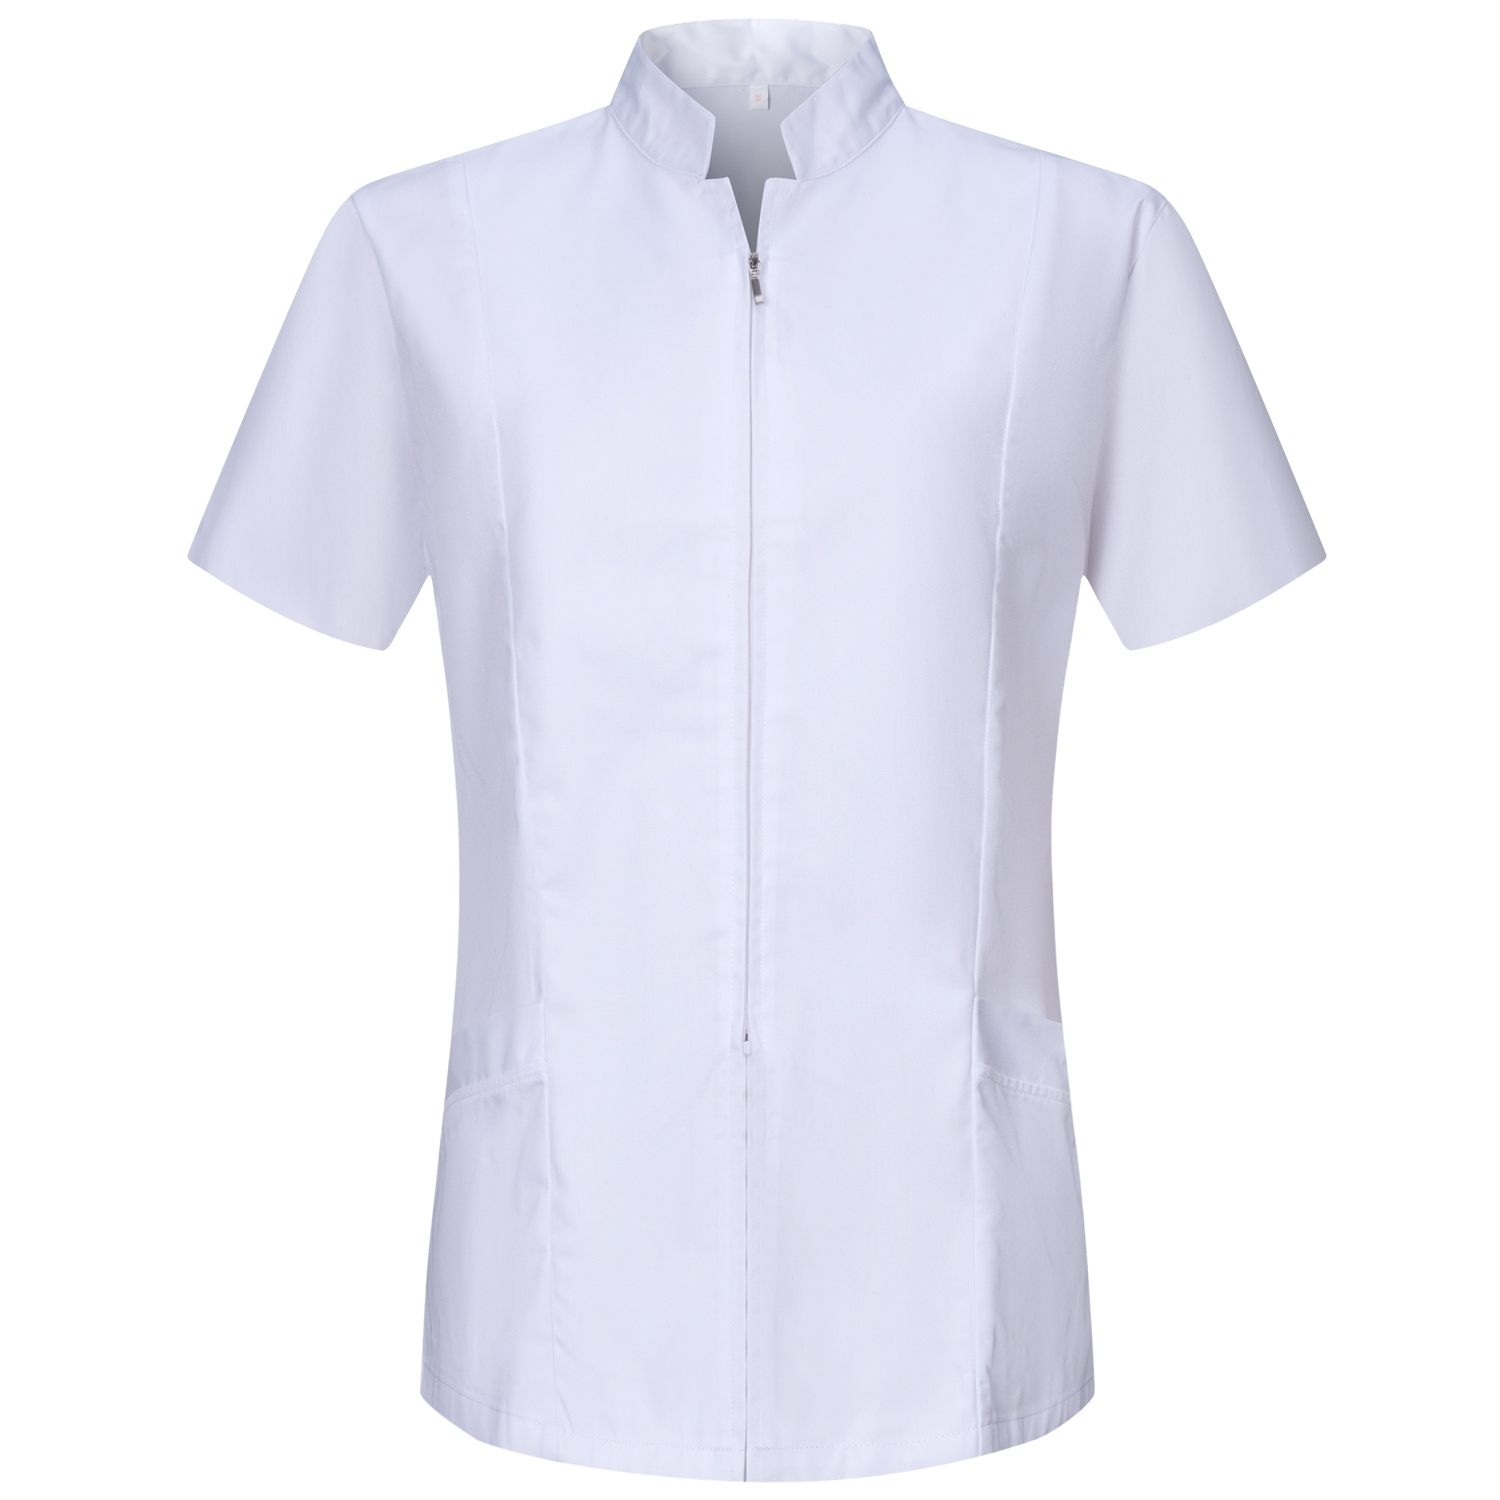 MISEMIYA Pack*2-Camisa Camisetas Mujer Medica Mangas Cortas Uniforme Laboral Sanitarios Hospital Limpieza Ref.T820 